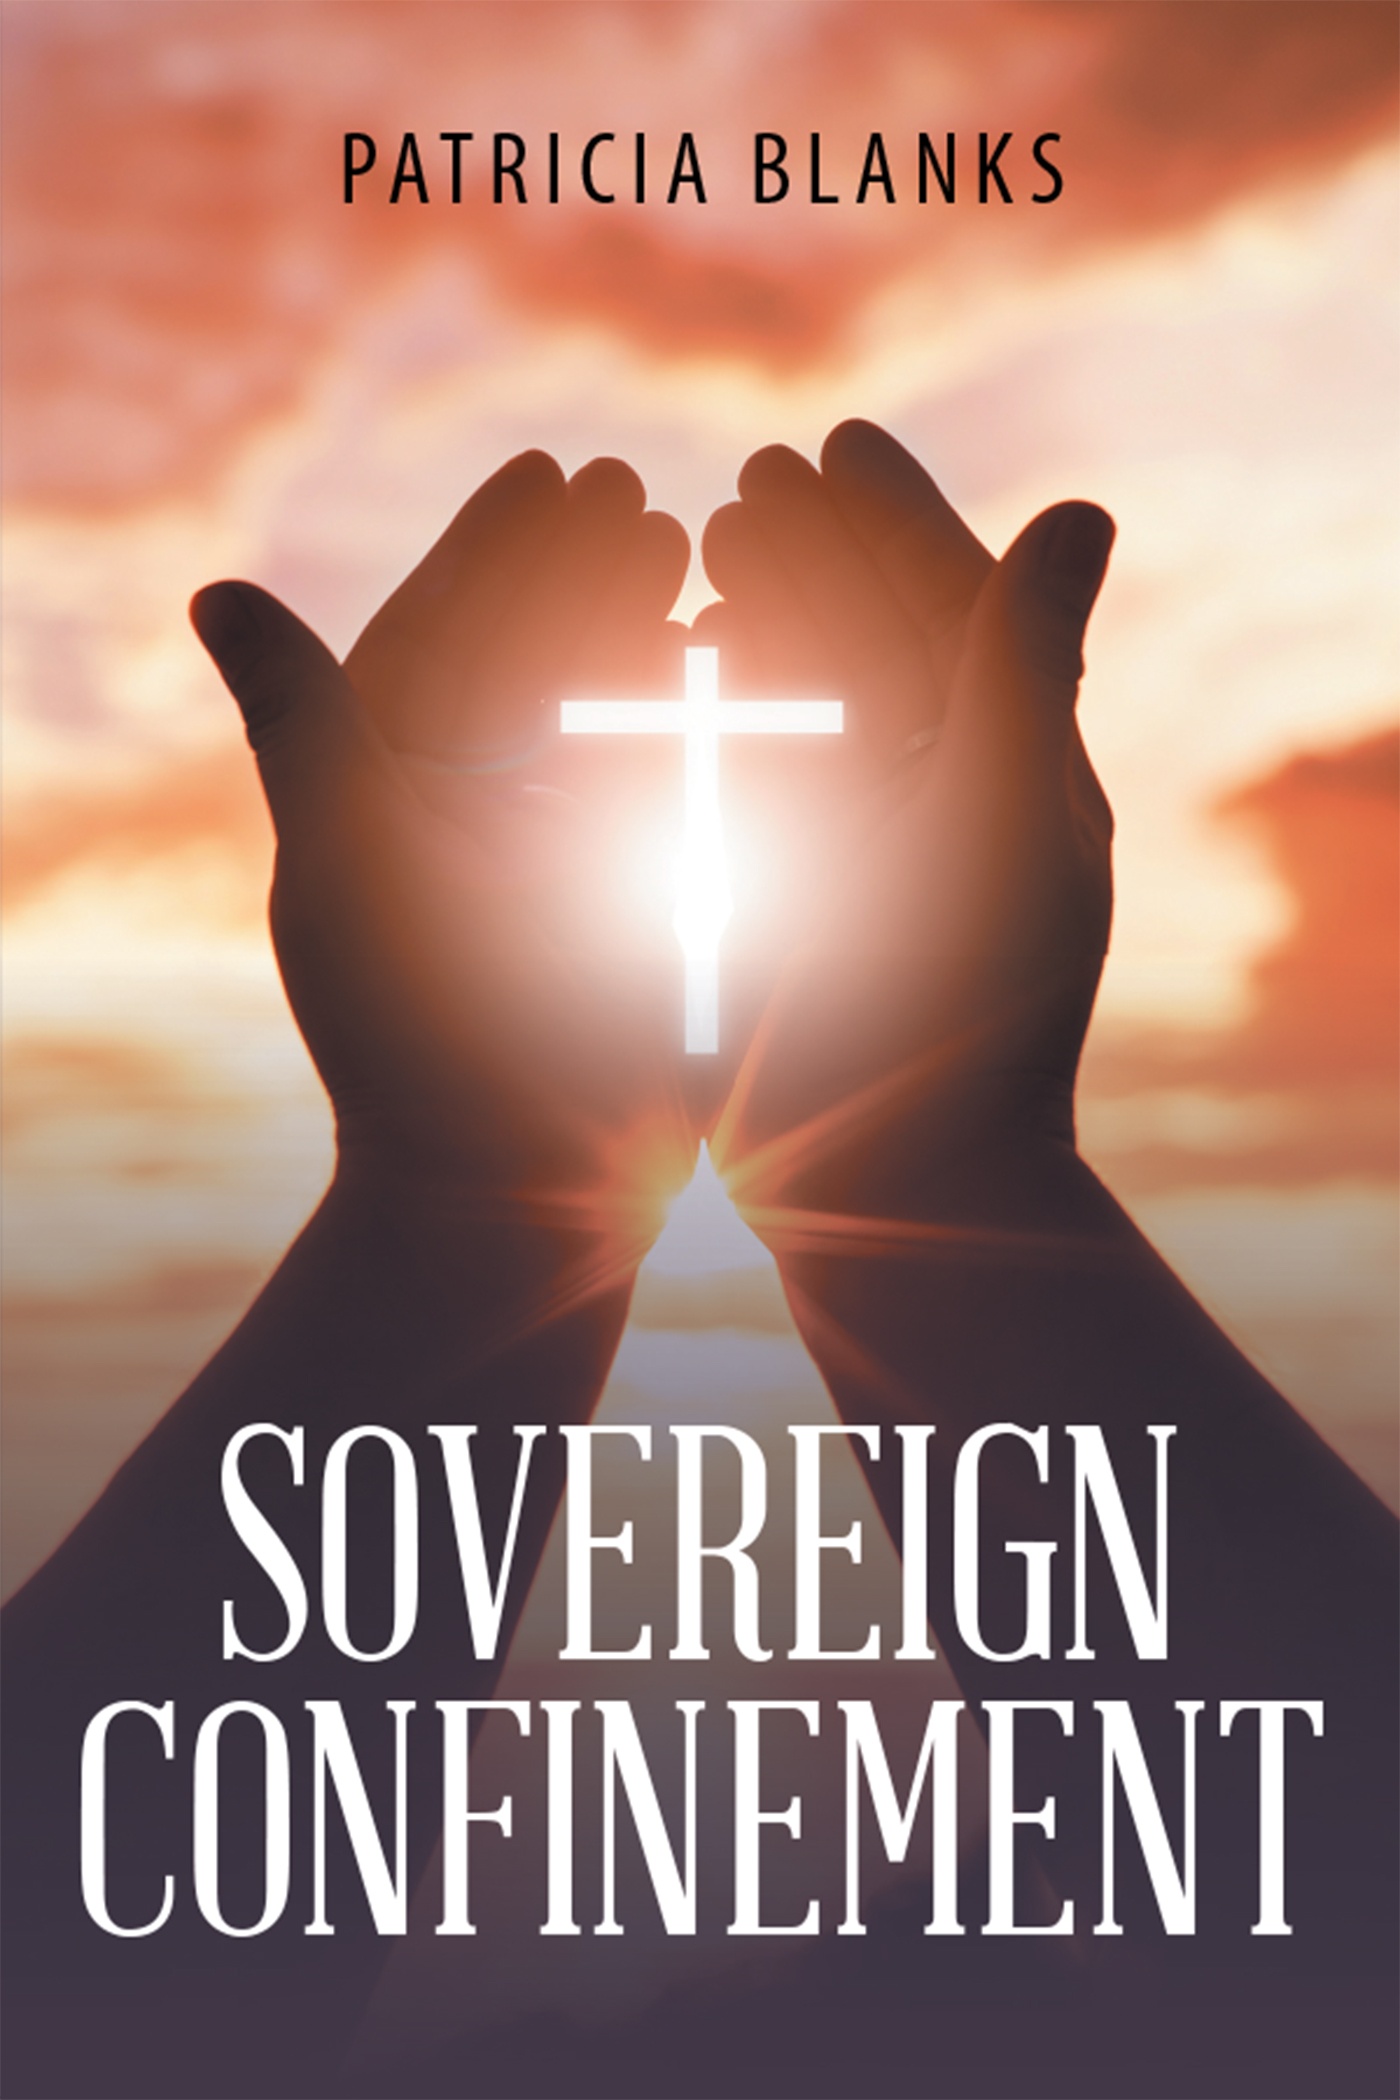 Sovereign Confinement